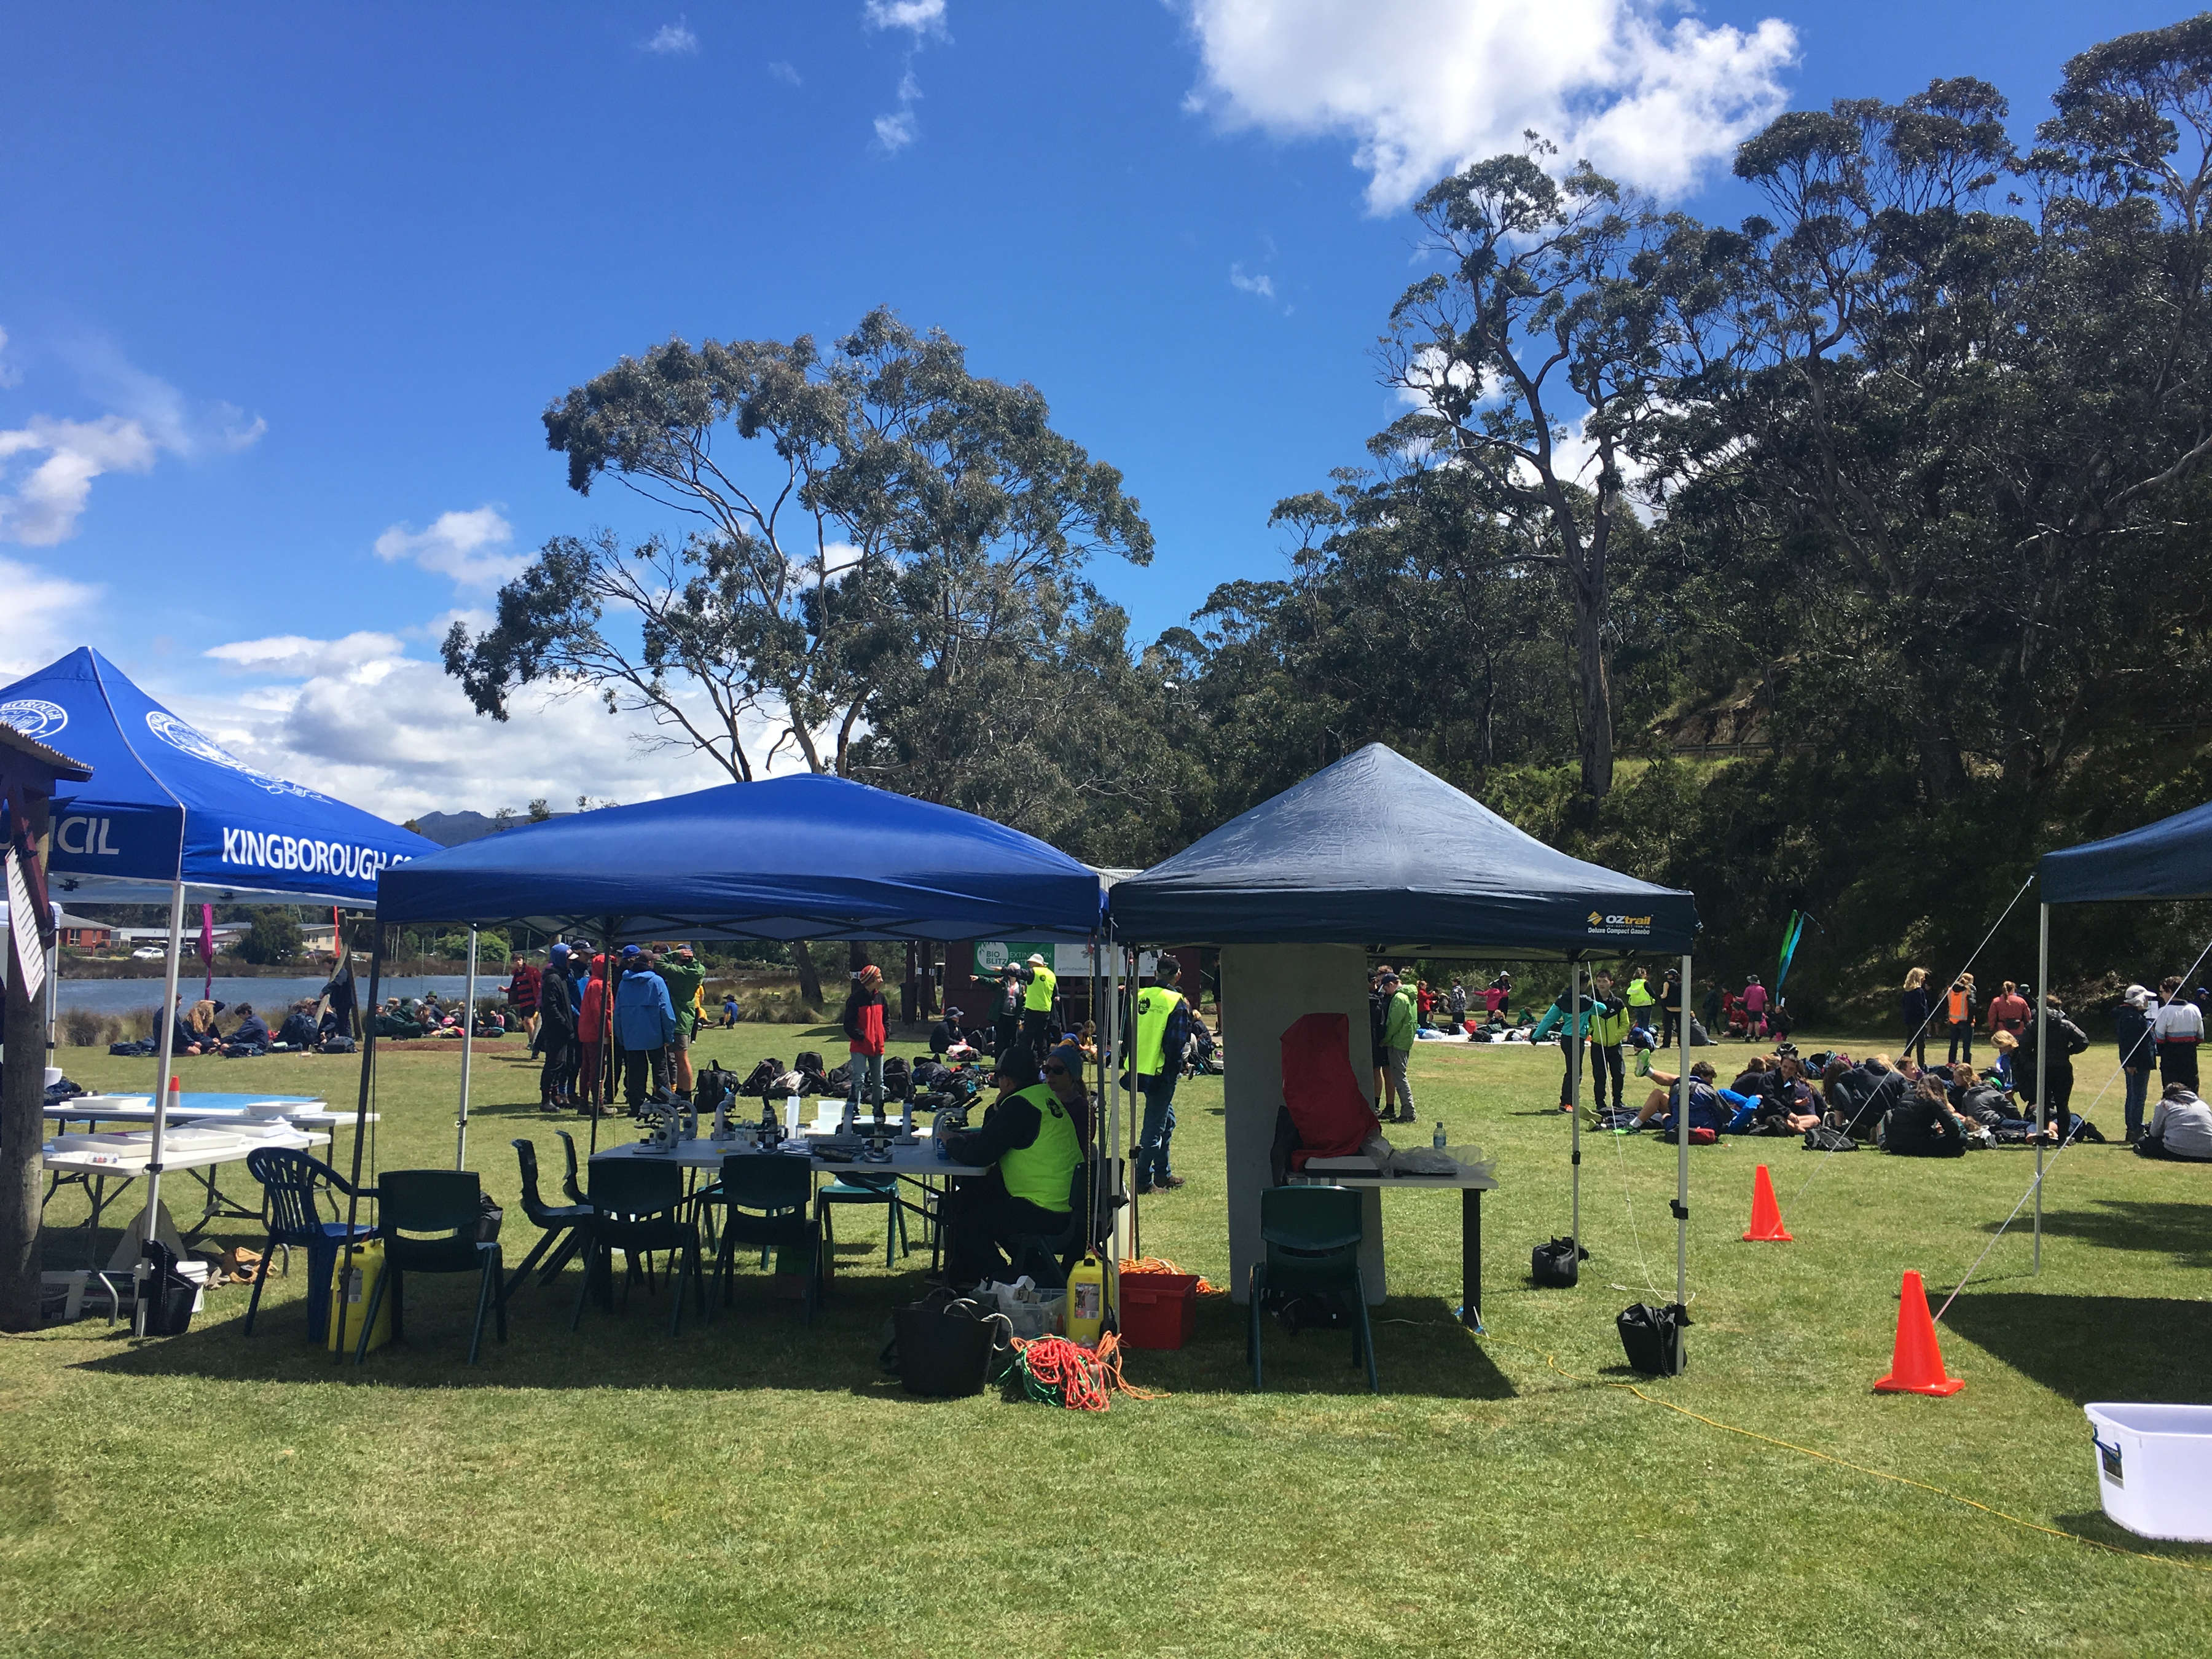 BioBlitz 2017 basecamp at Browns River in Kingston Tasmania.